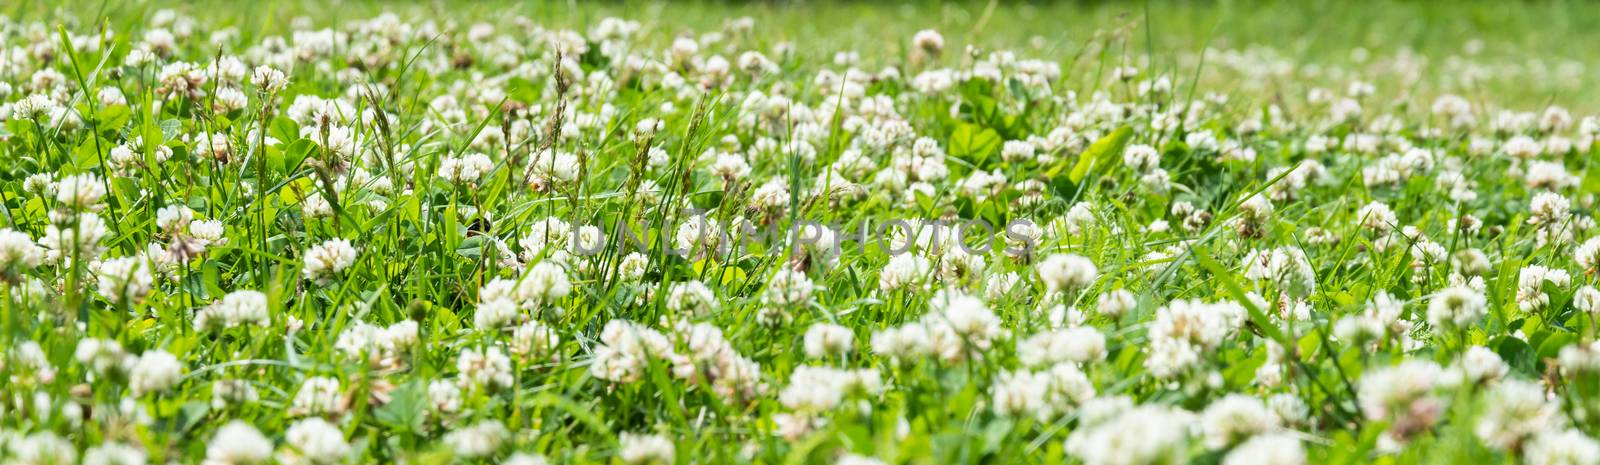 Clover Field. white Flowering clover Trifolium pratense repens.  by wektorygrafika